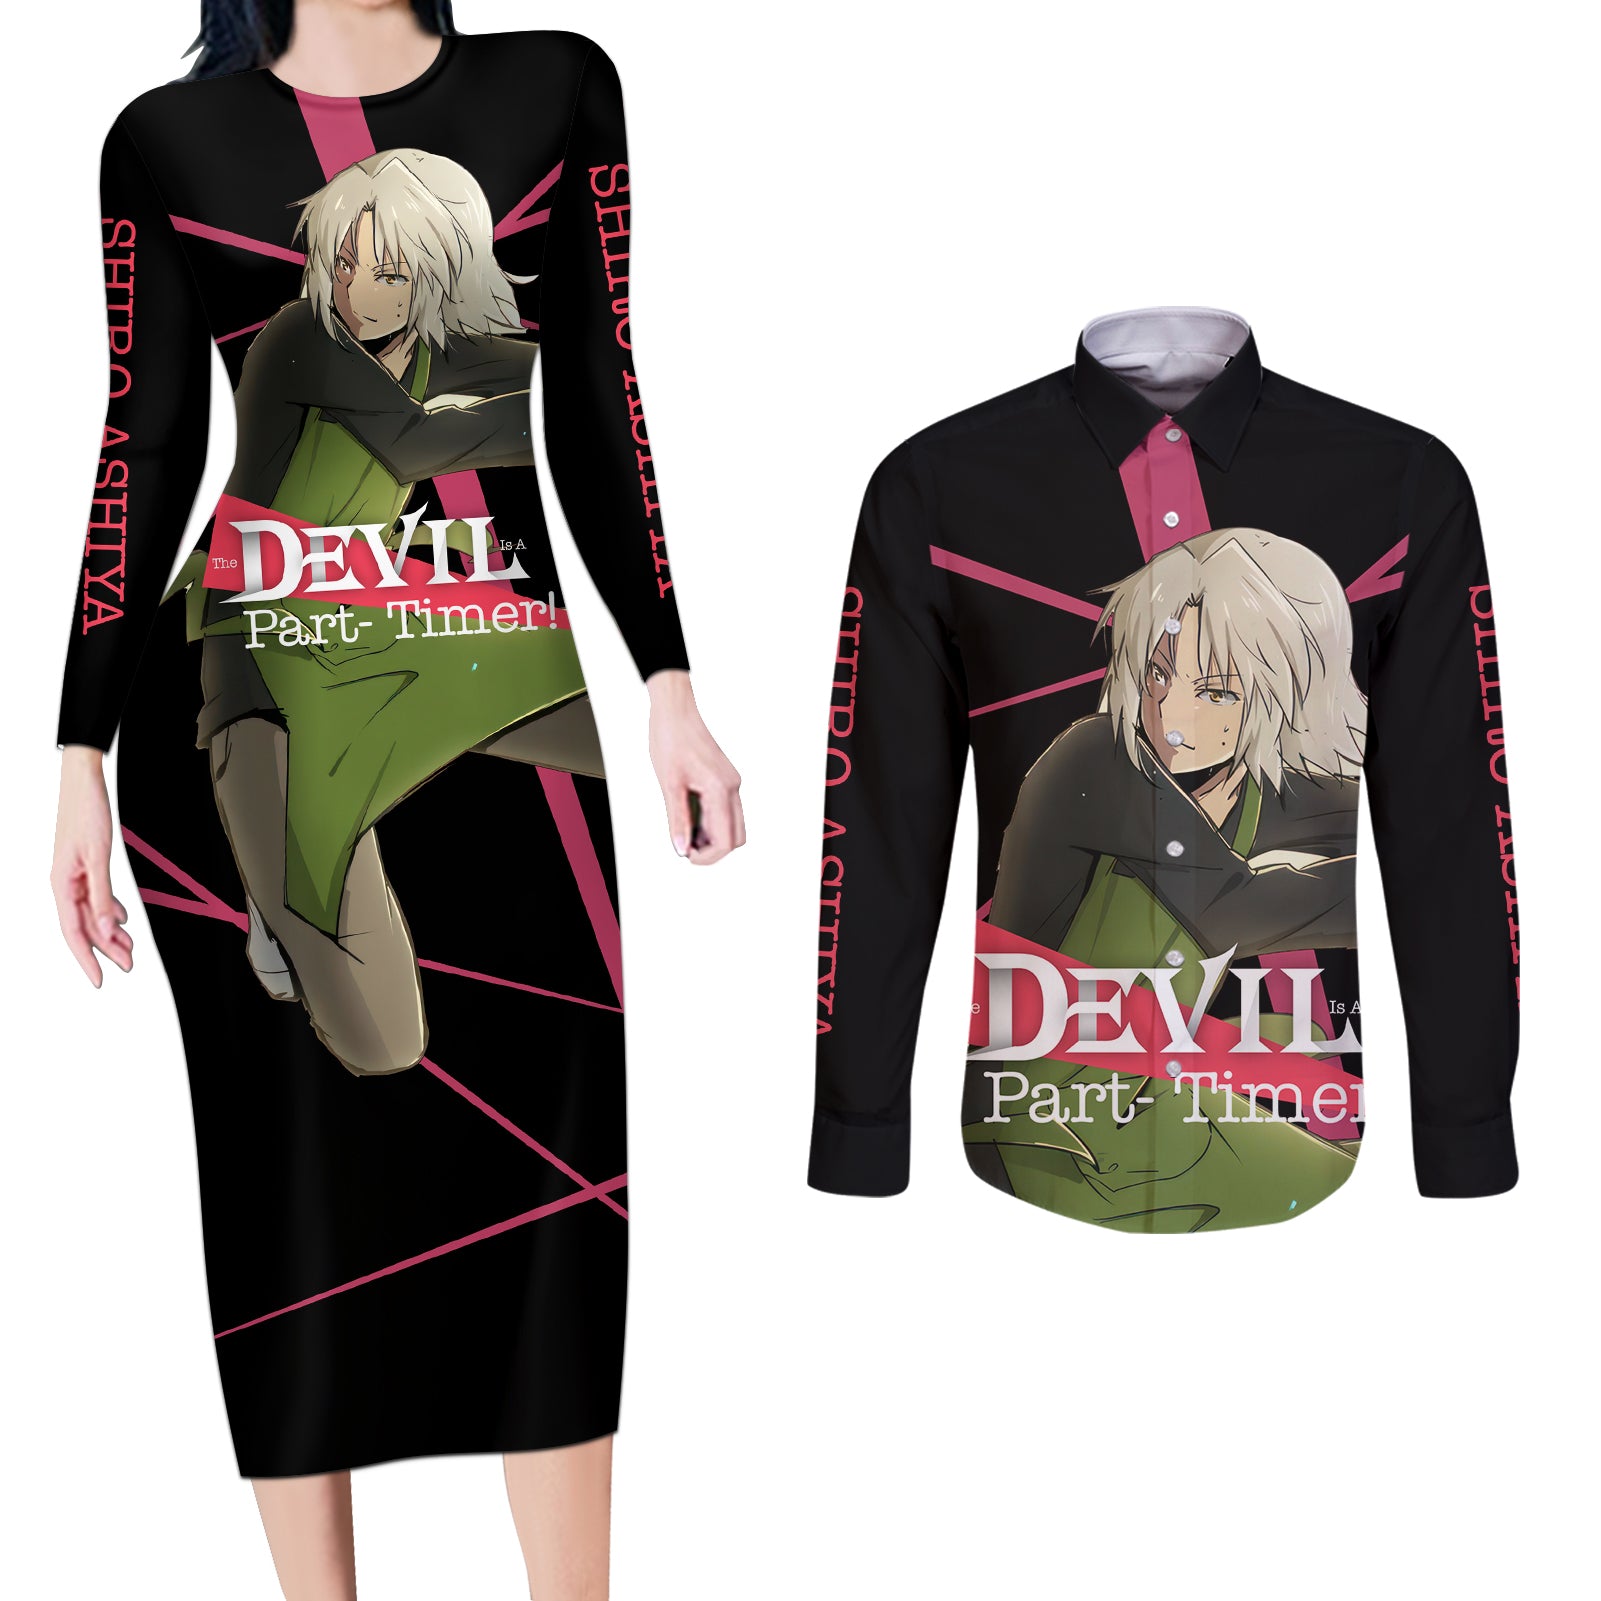 Shiro Ashiya The Devil Part Timer Couples Matching Long Sleeve Bodycon Dress and Long Sleeve Button Shirt Anime Style